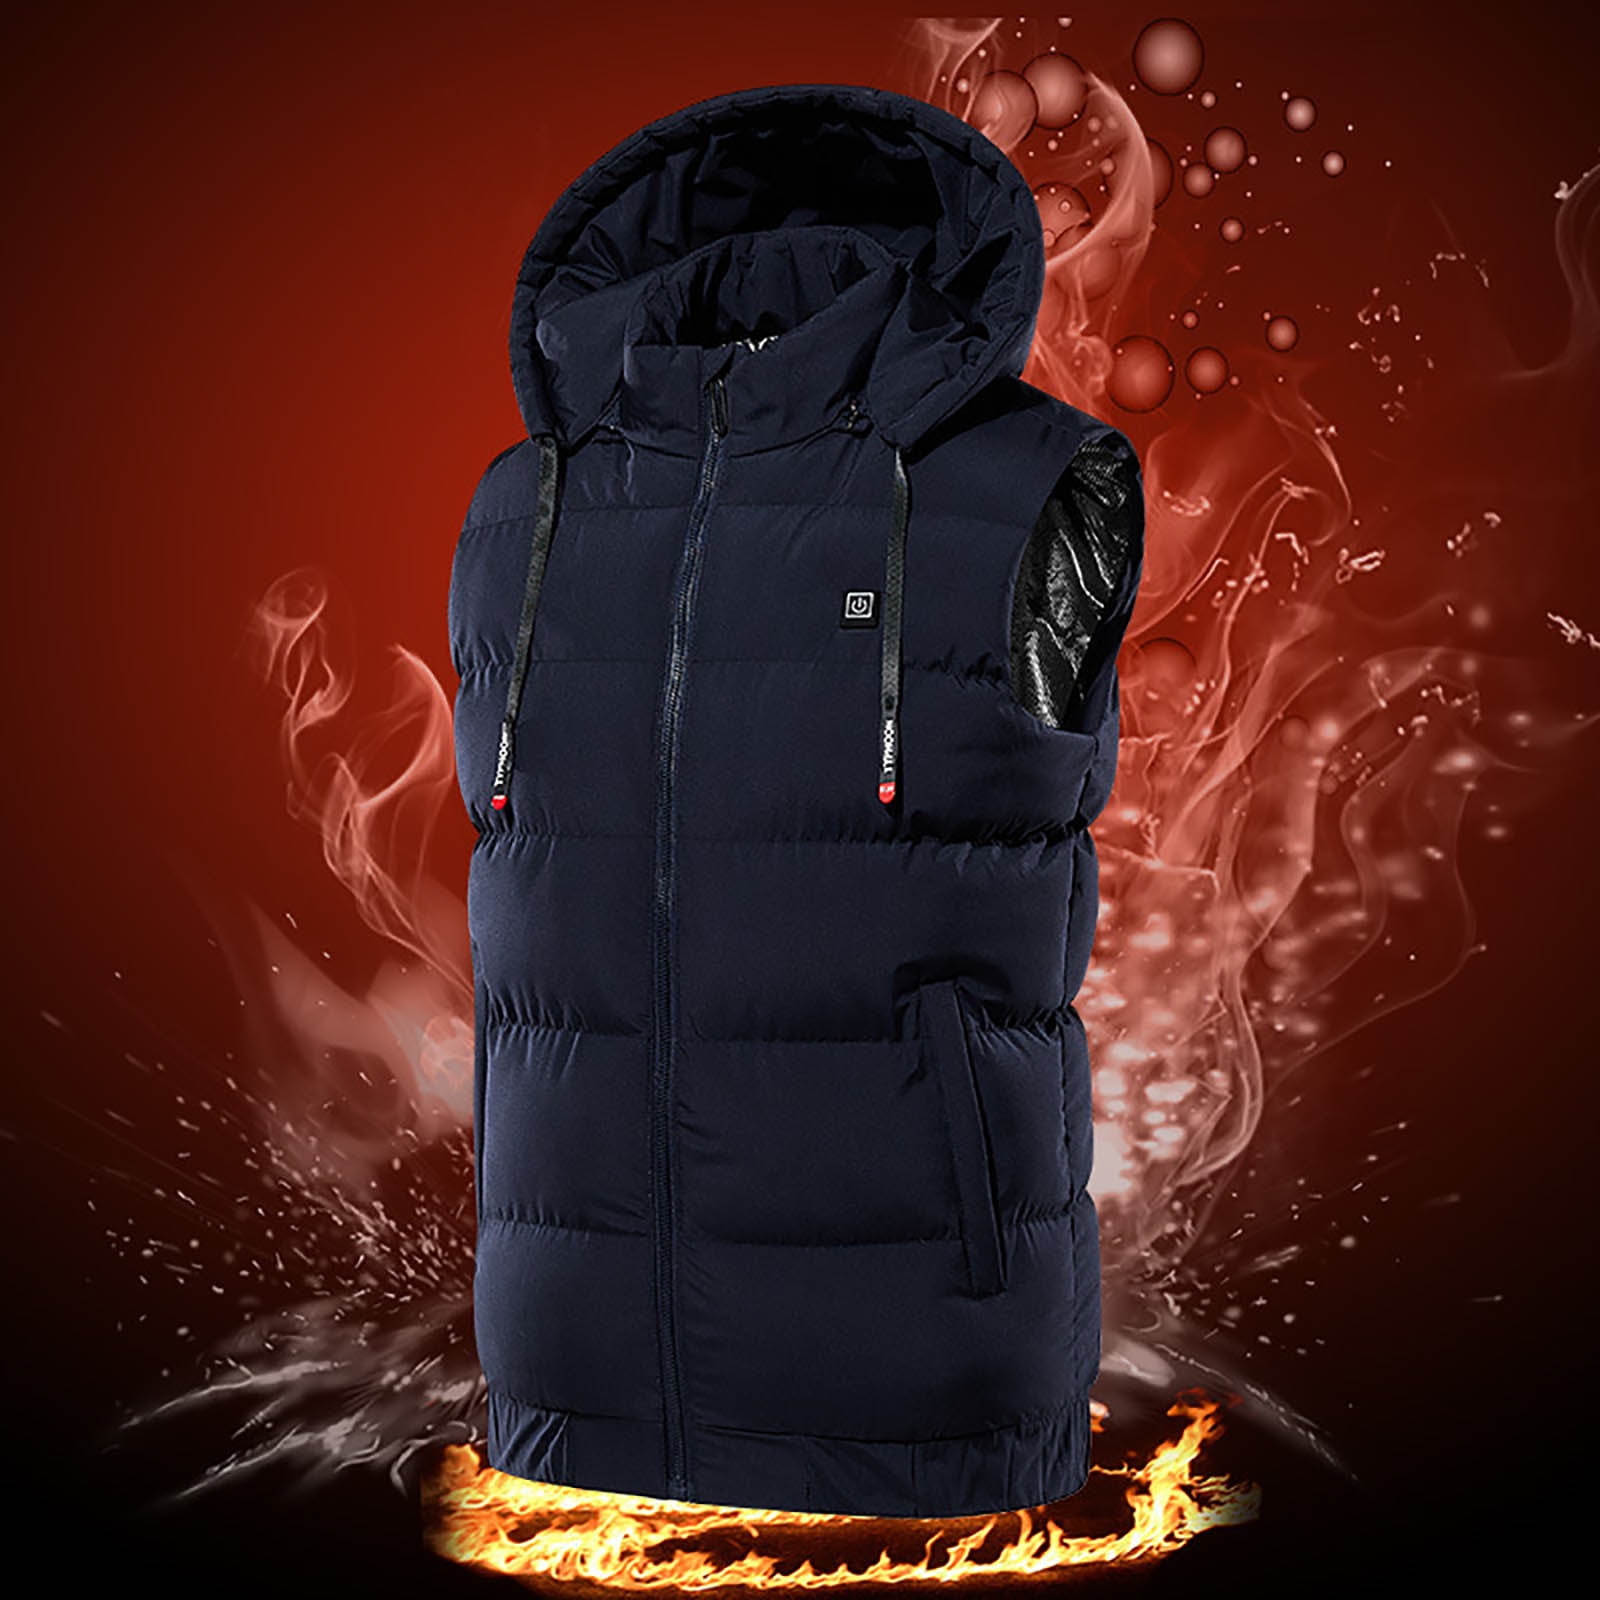 EMPIRE 5v Heated Vest by Volt - Volt Heat